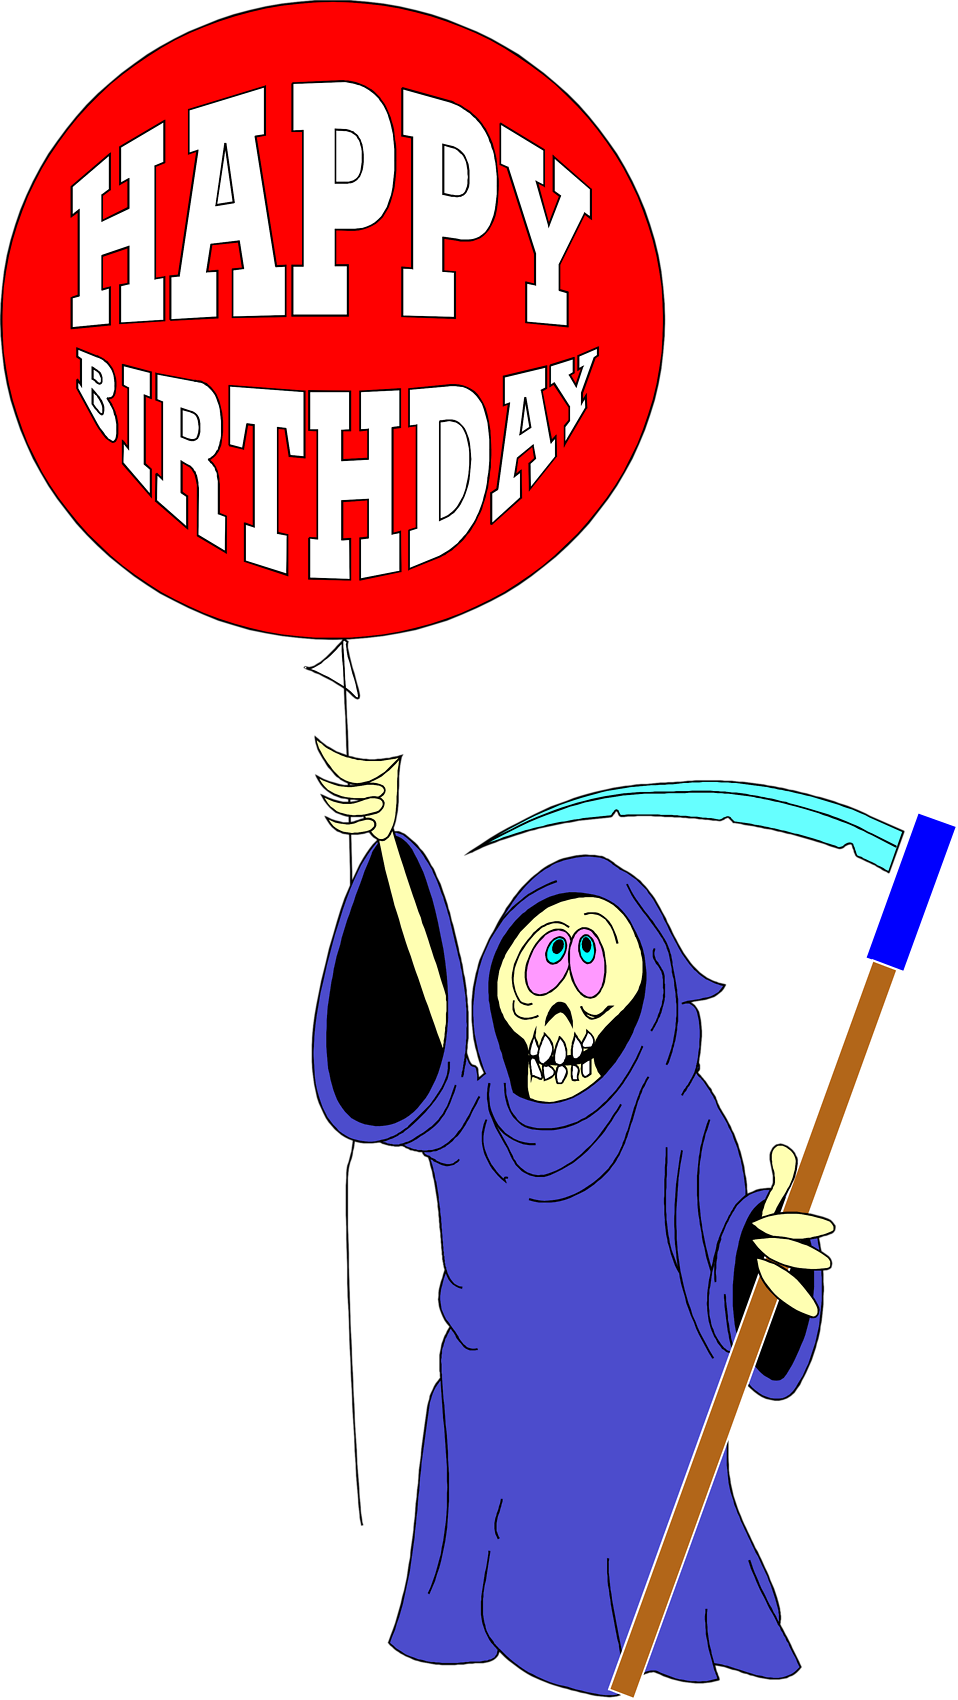 Grim reaper clipart stock photo. Birthday free illustration of